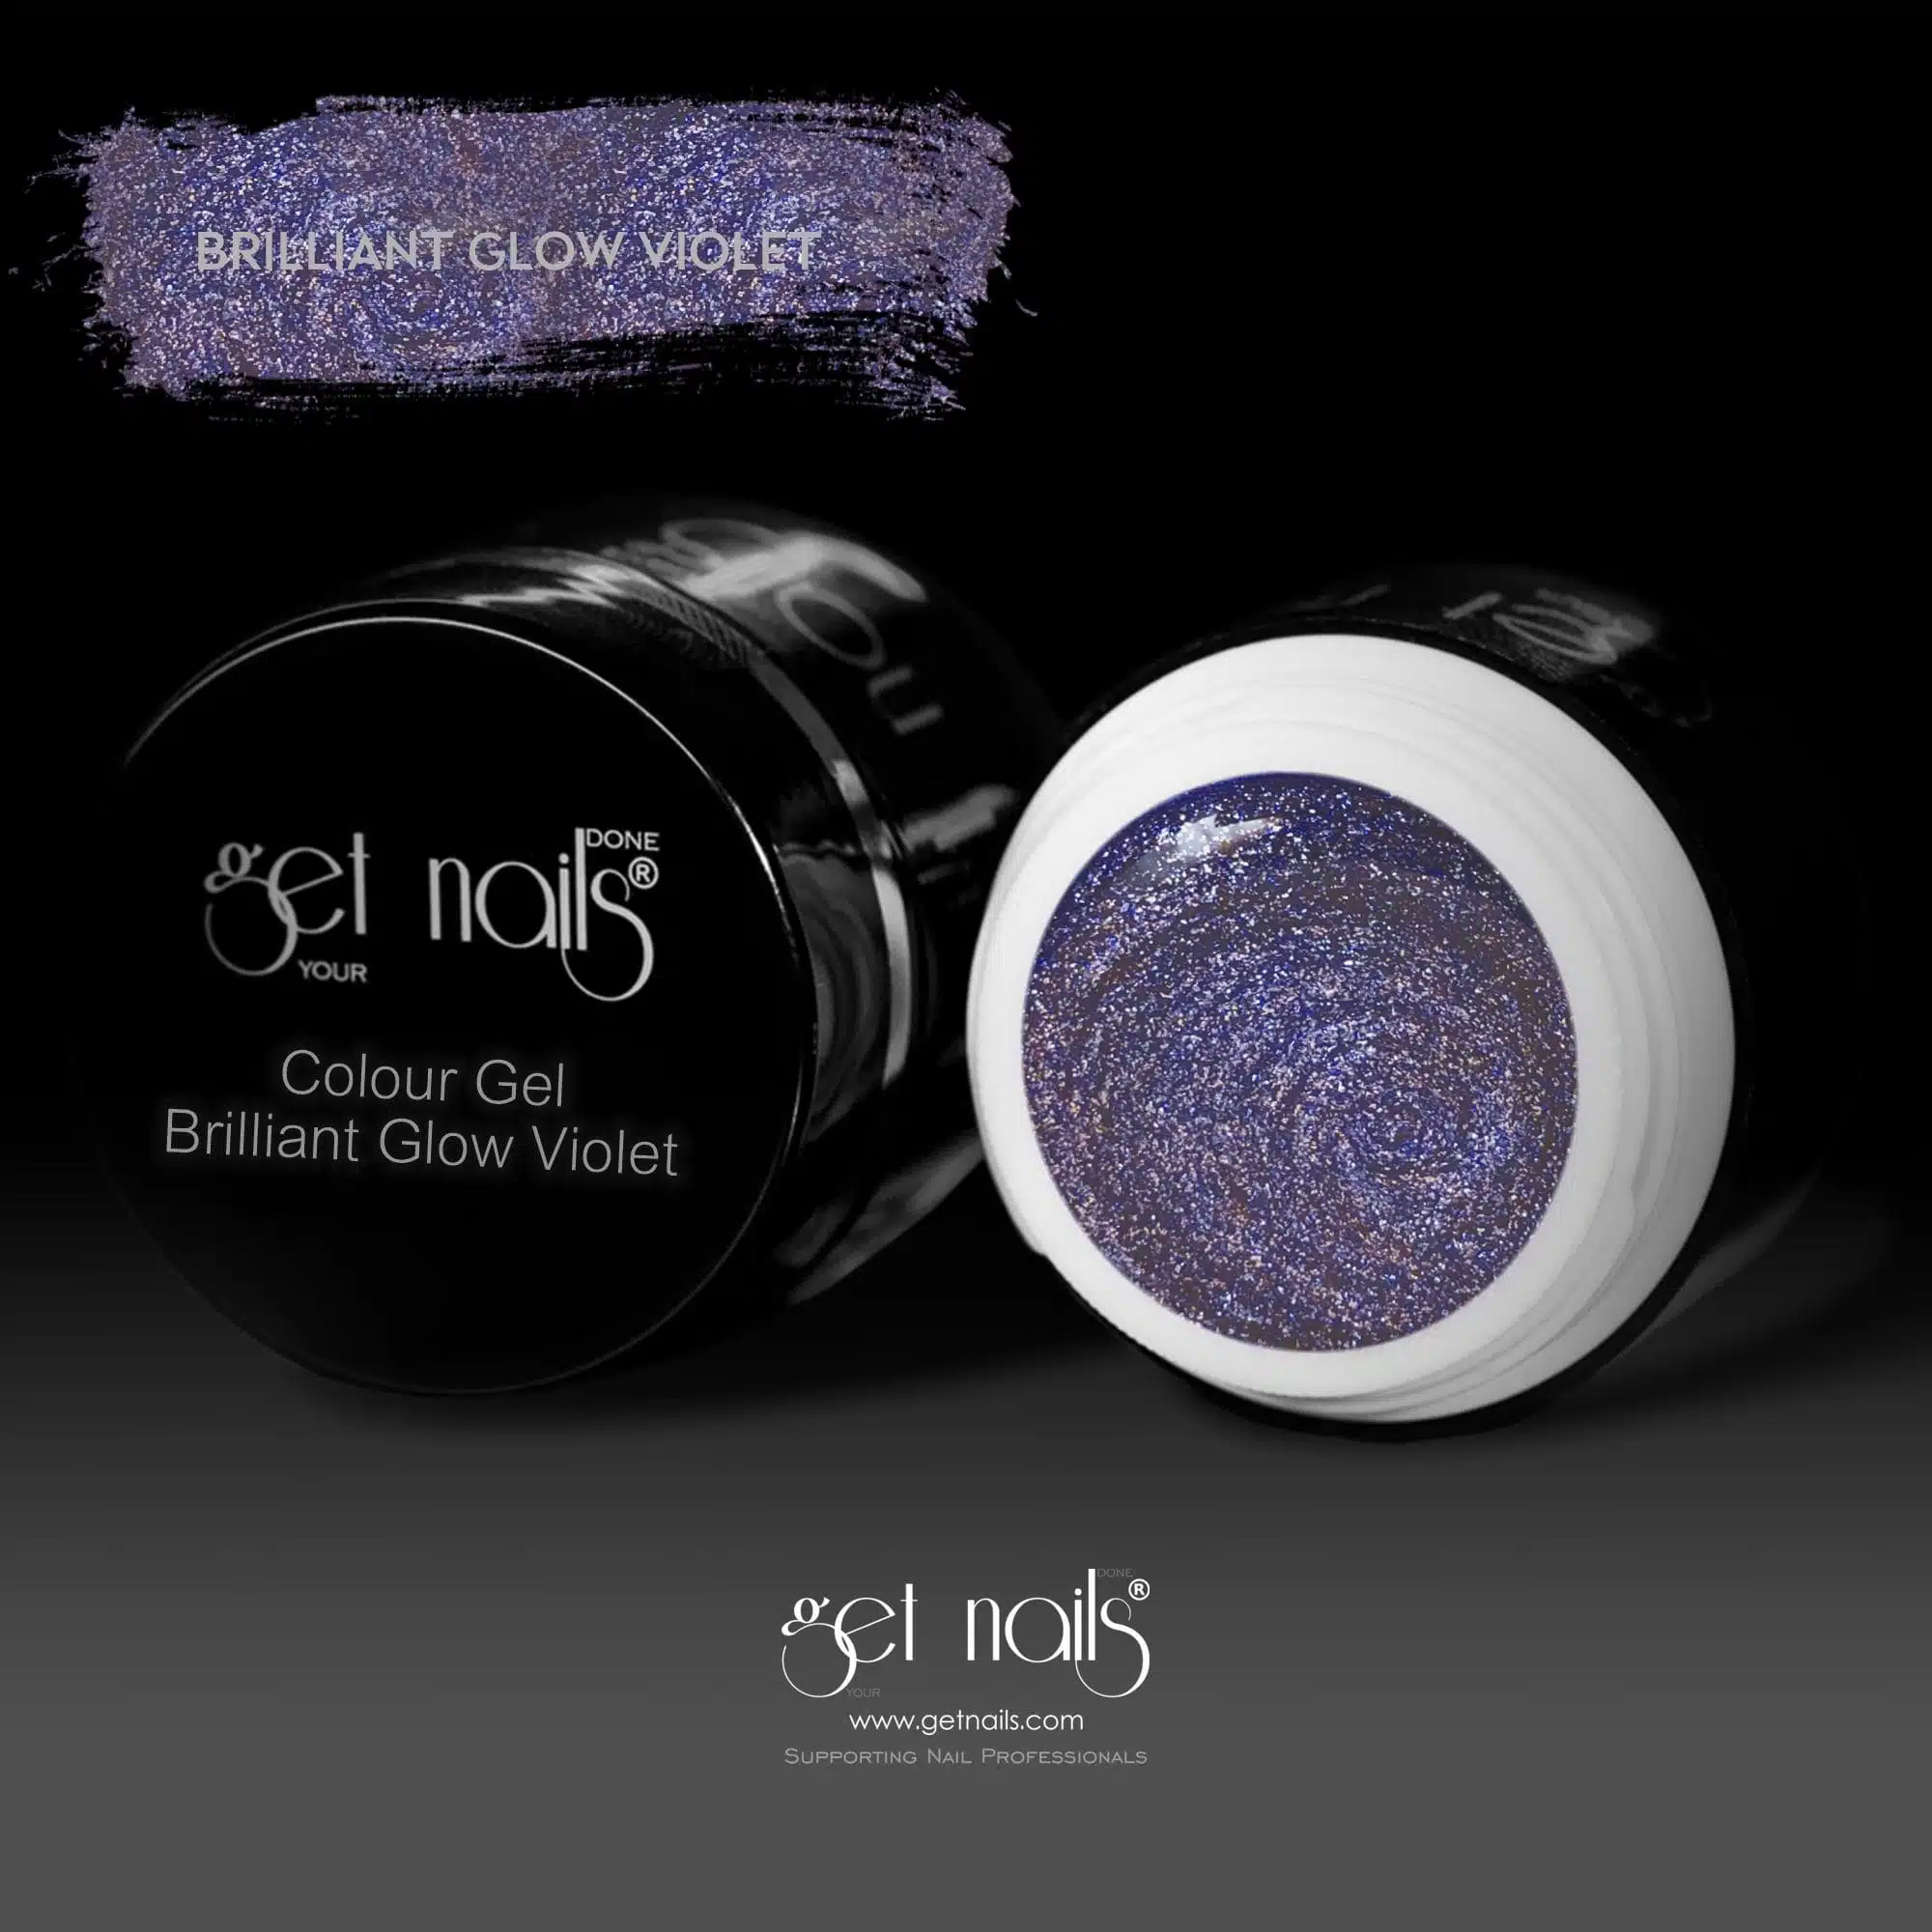 Get Nails Austria - Цветной гель Brilliant Glow Violet 5g